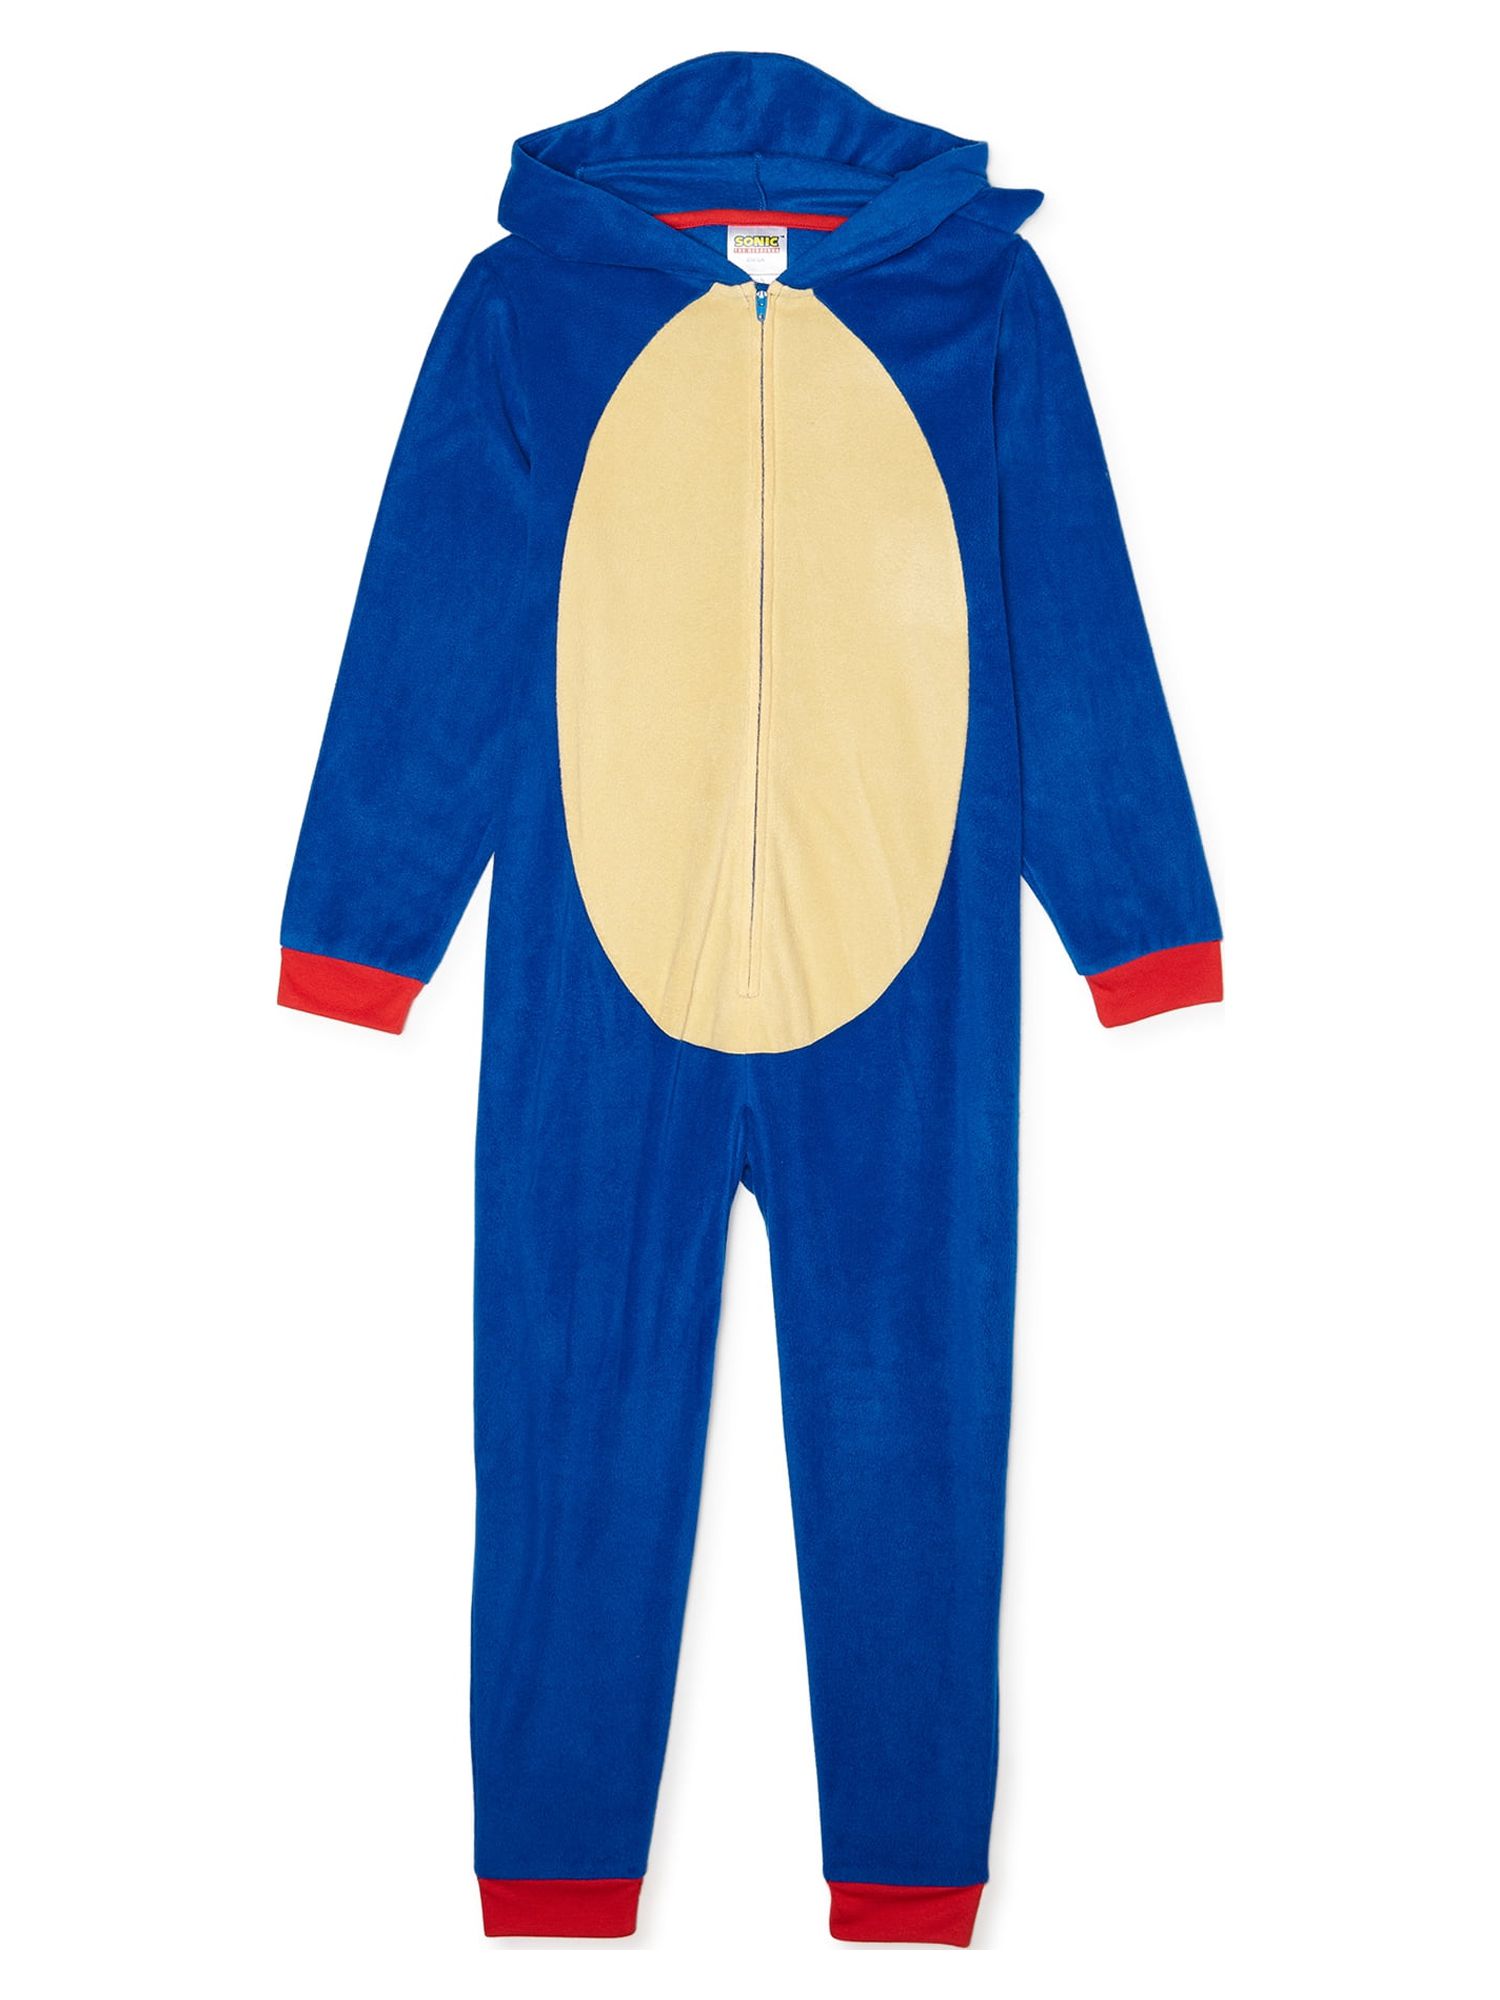 Sonic the Hedgehog Boys Hooded Character Pajama Blanket Sleeper Sizes 4-12 - image 1 of 3